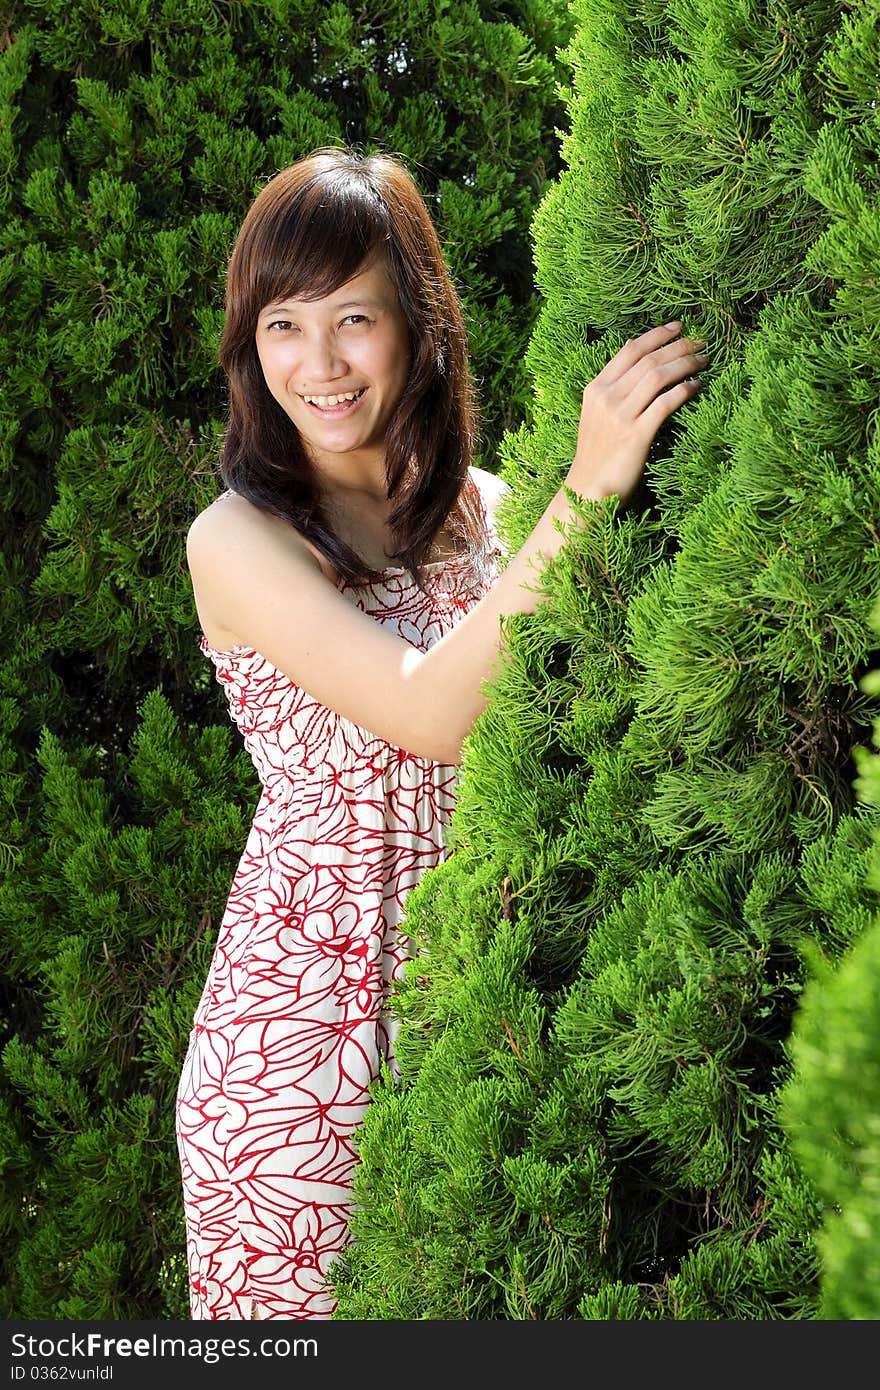 Young beautiful girl smiling outdoor near pine tree. Young beautiful girl smiling outdoor near pine tree